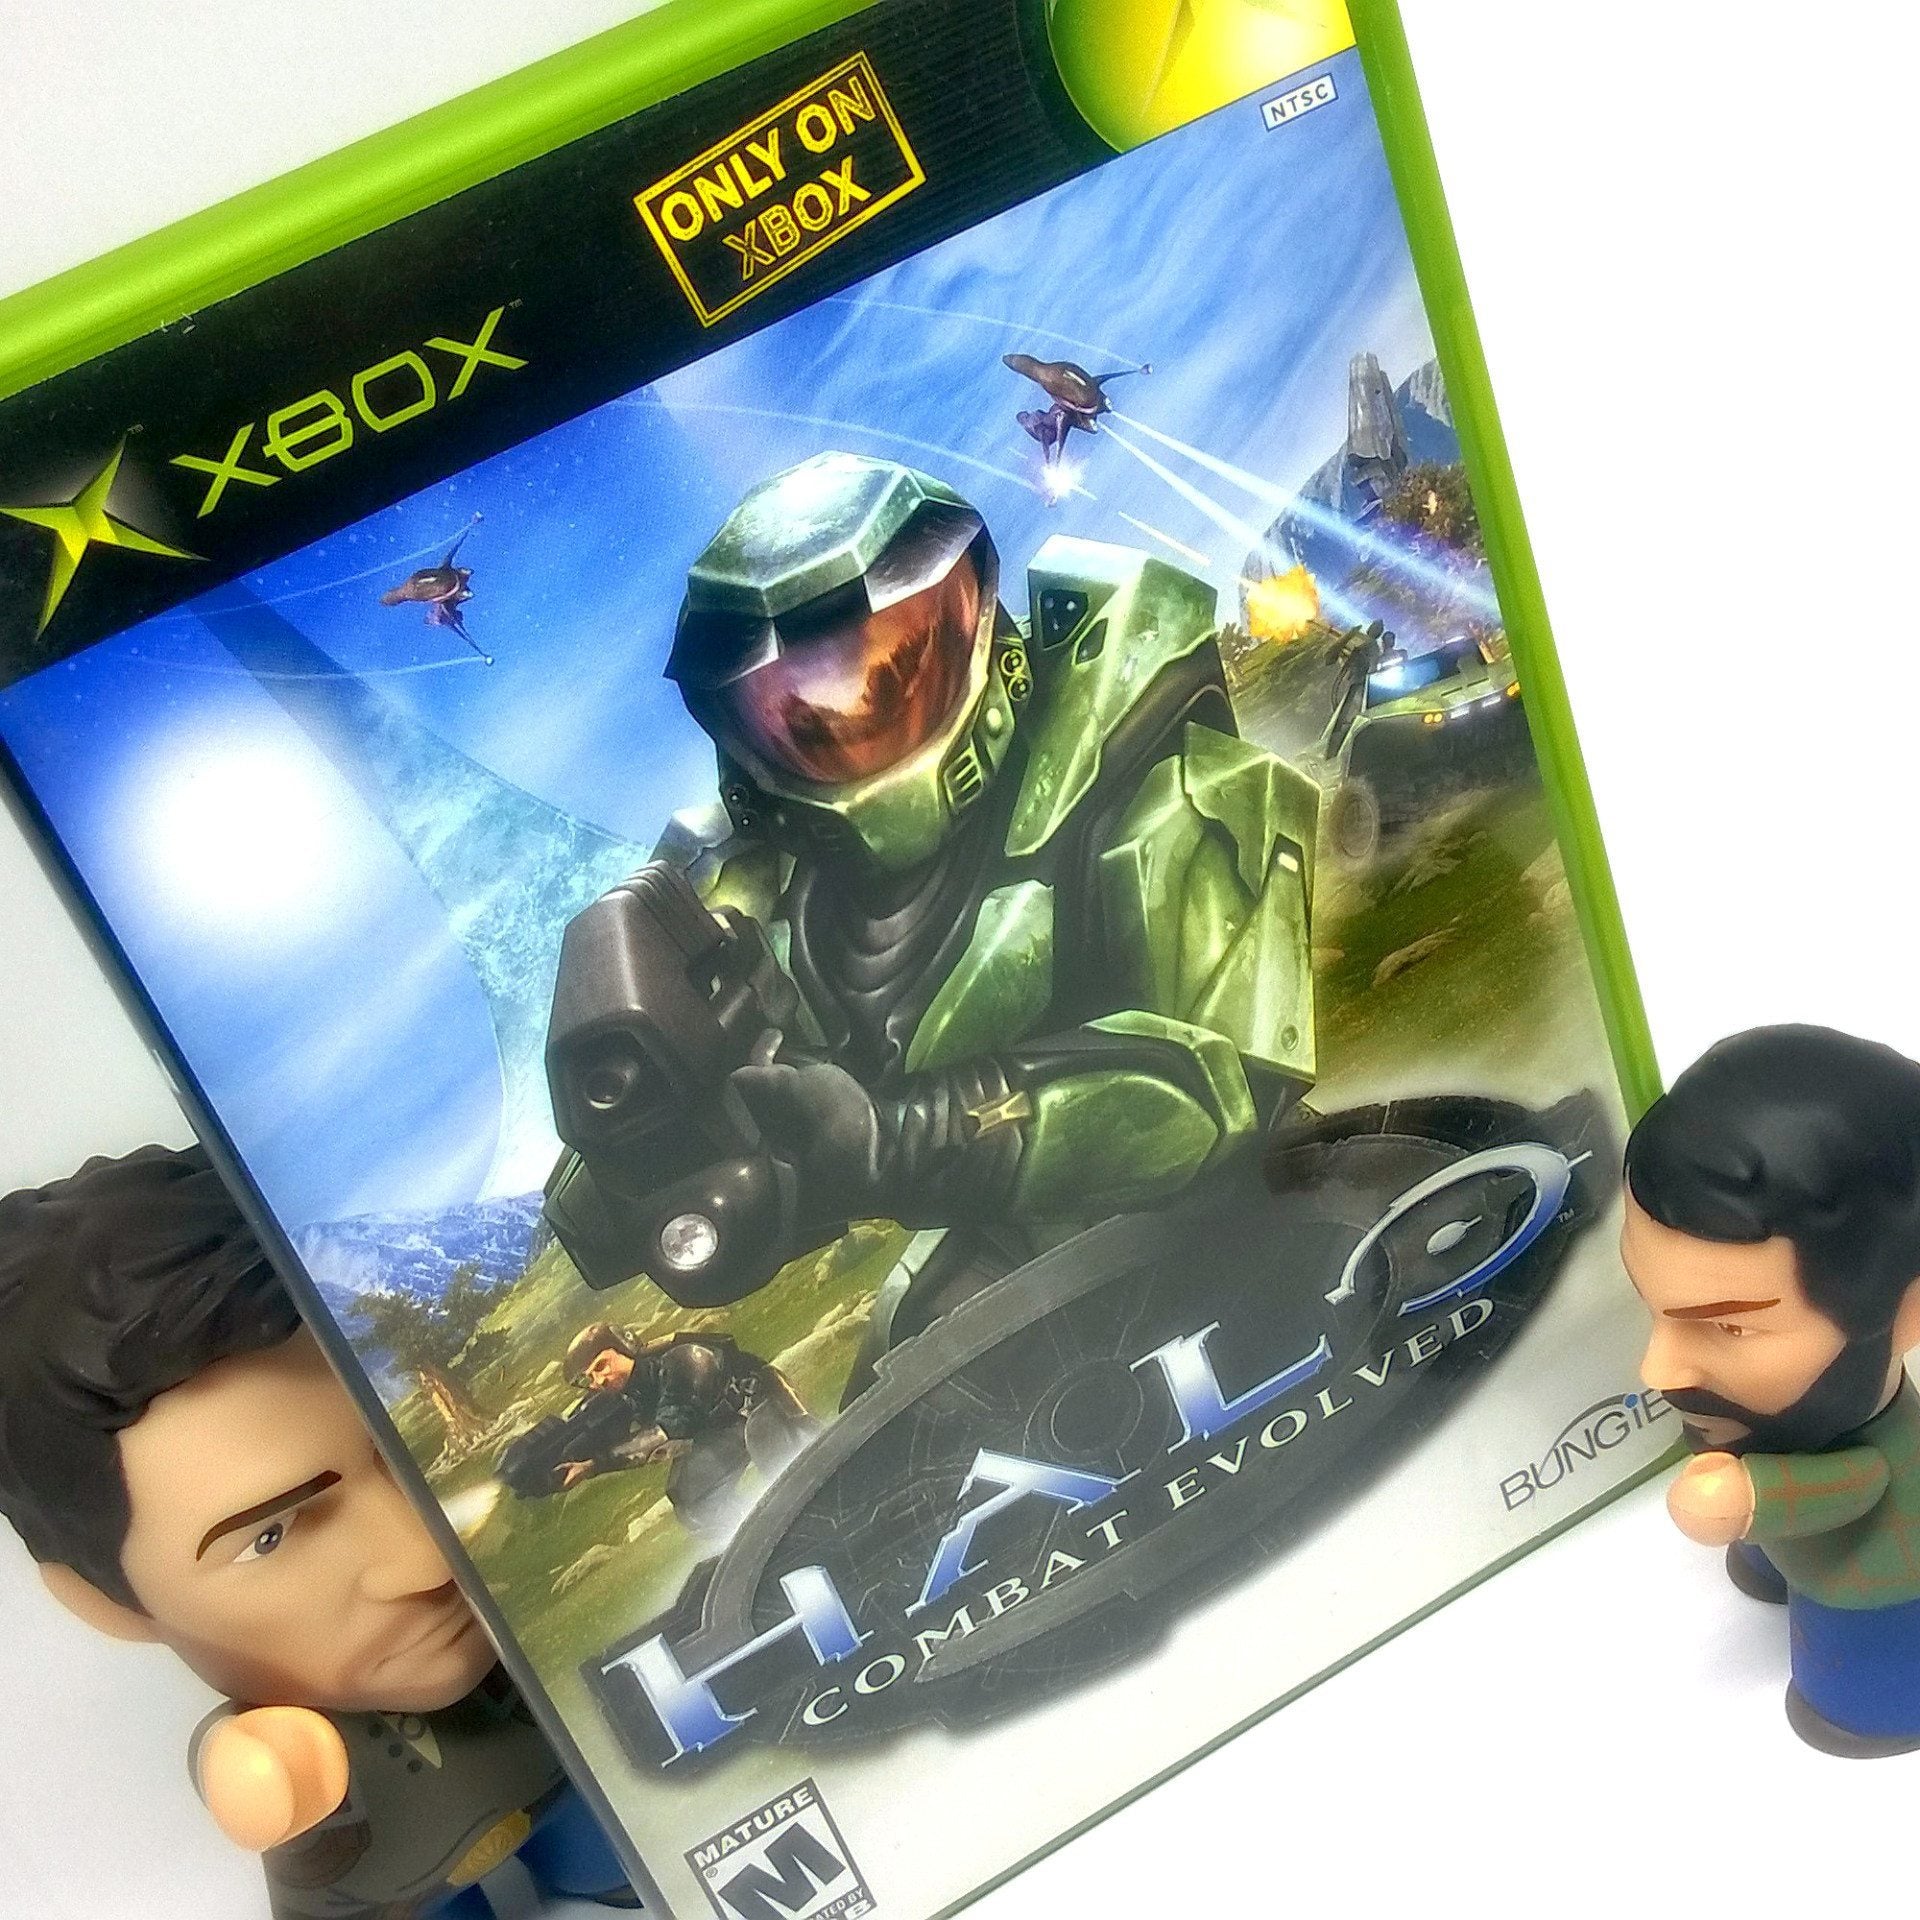 Halo: Combat Evolved Microsoft Xbox Game